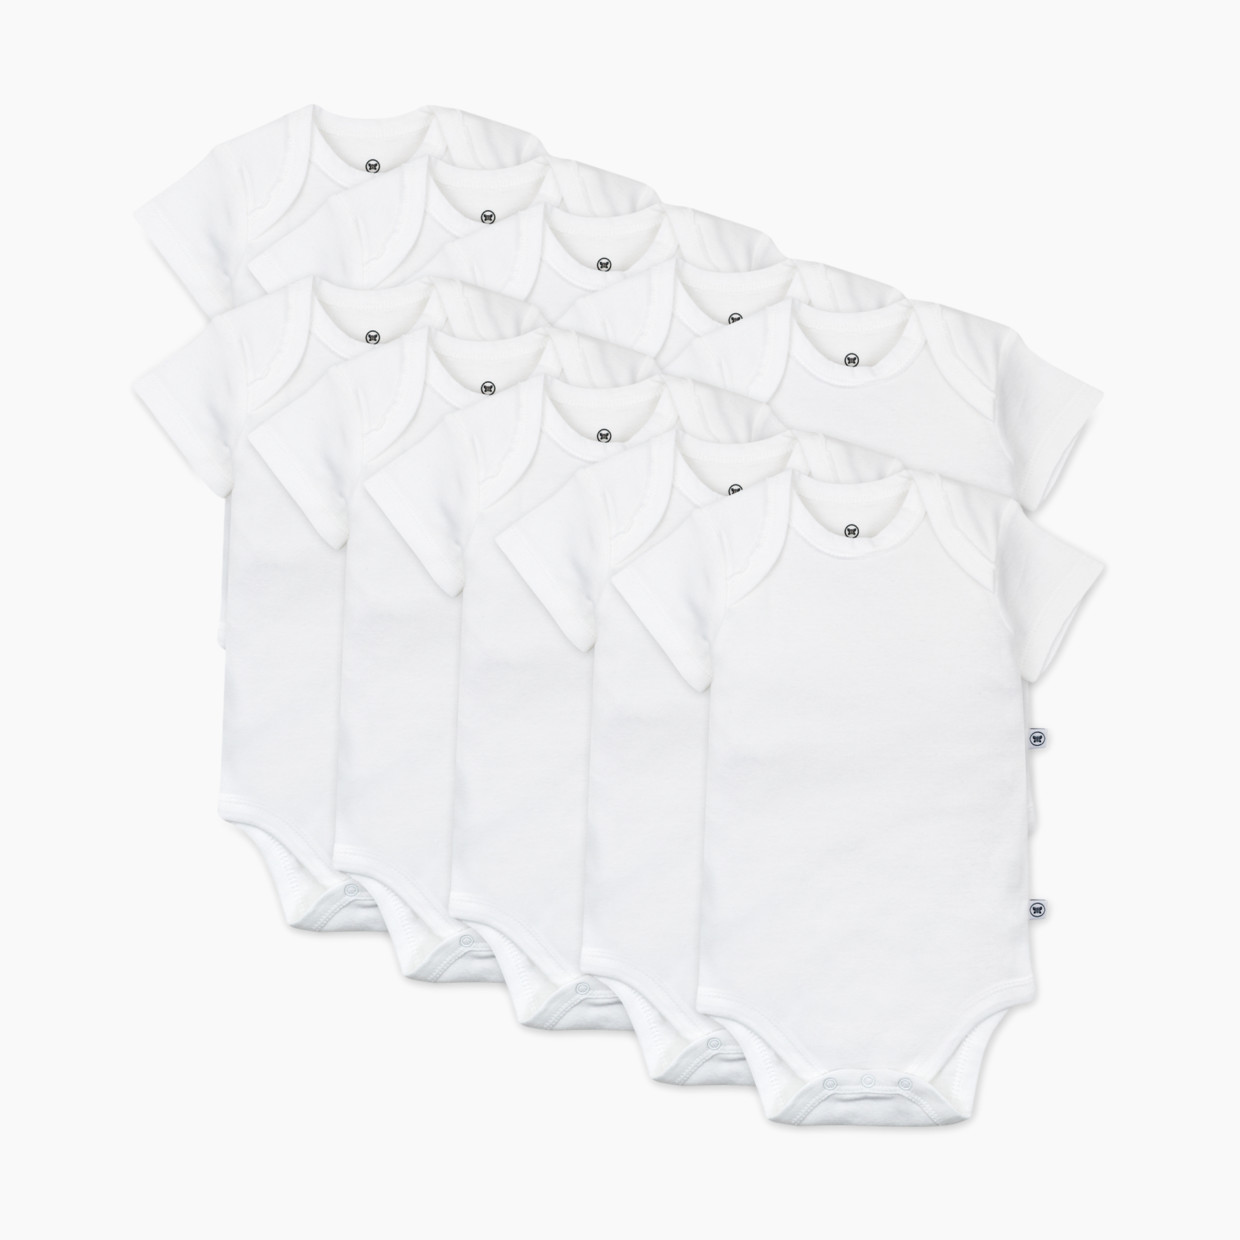 Honest Baby Clothing 10-Pack Organic Cotton Short Sleeve Bodysuits - Bright White, Nb, 10.